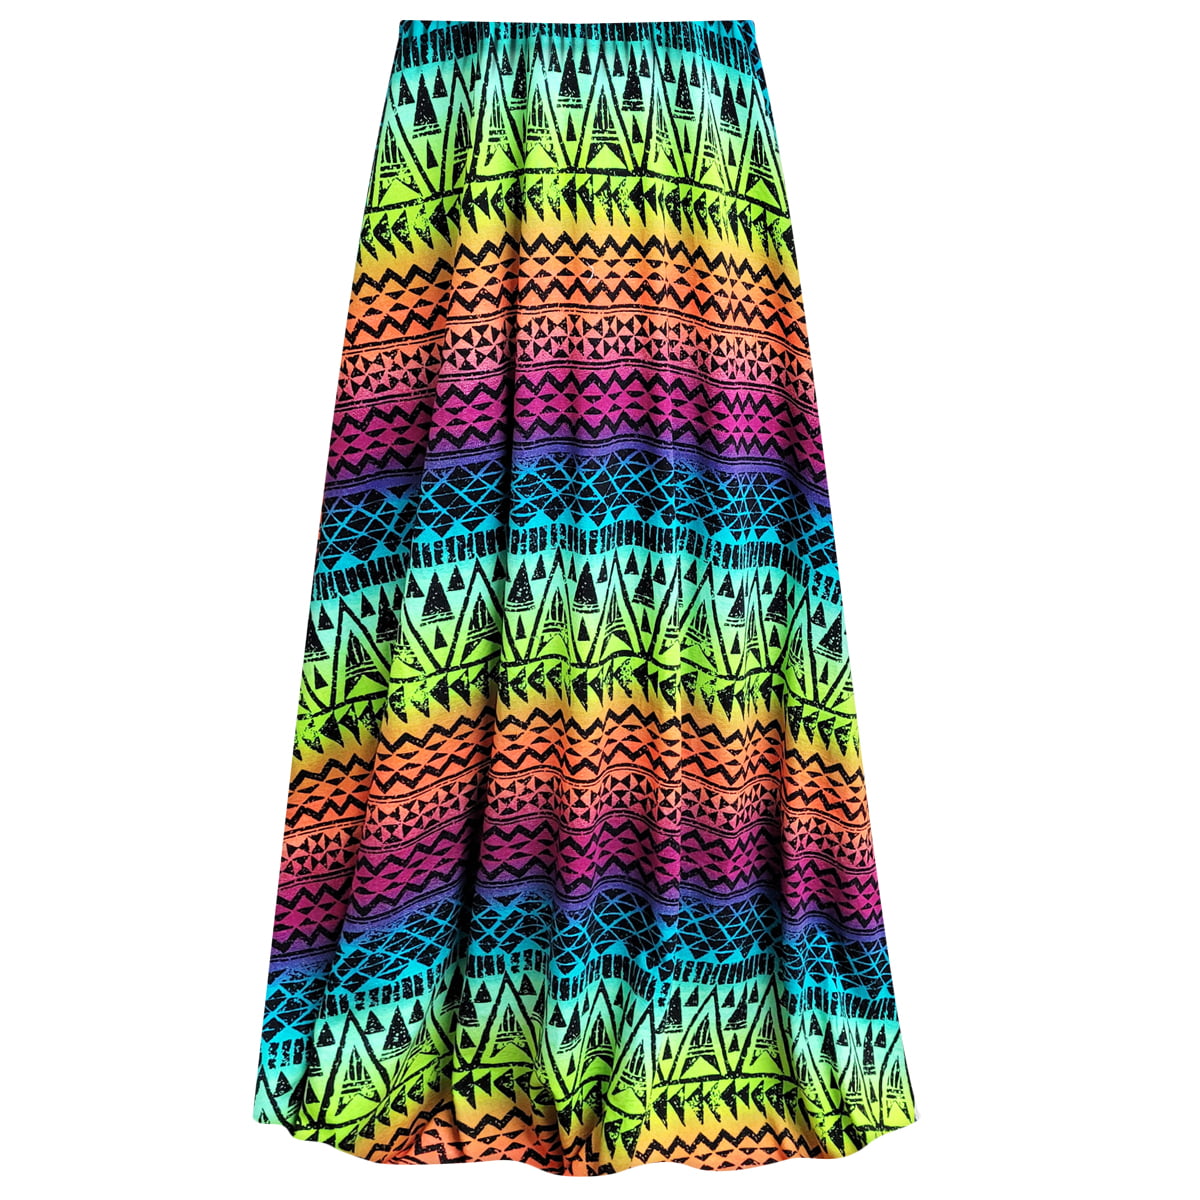 Plus size 2x Women's Boho Skirt - Elastic Waist Maxi Skirt Colorful  Abstract Ethnic Print A-Line - Walmart.com